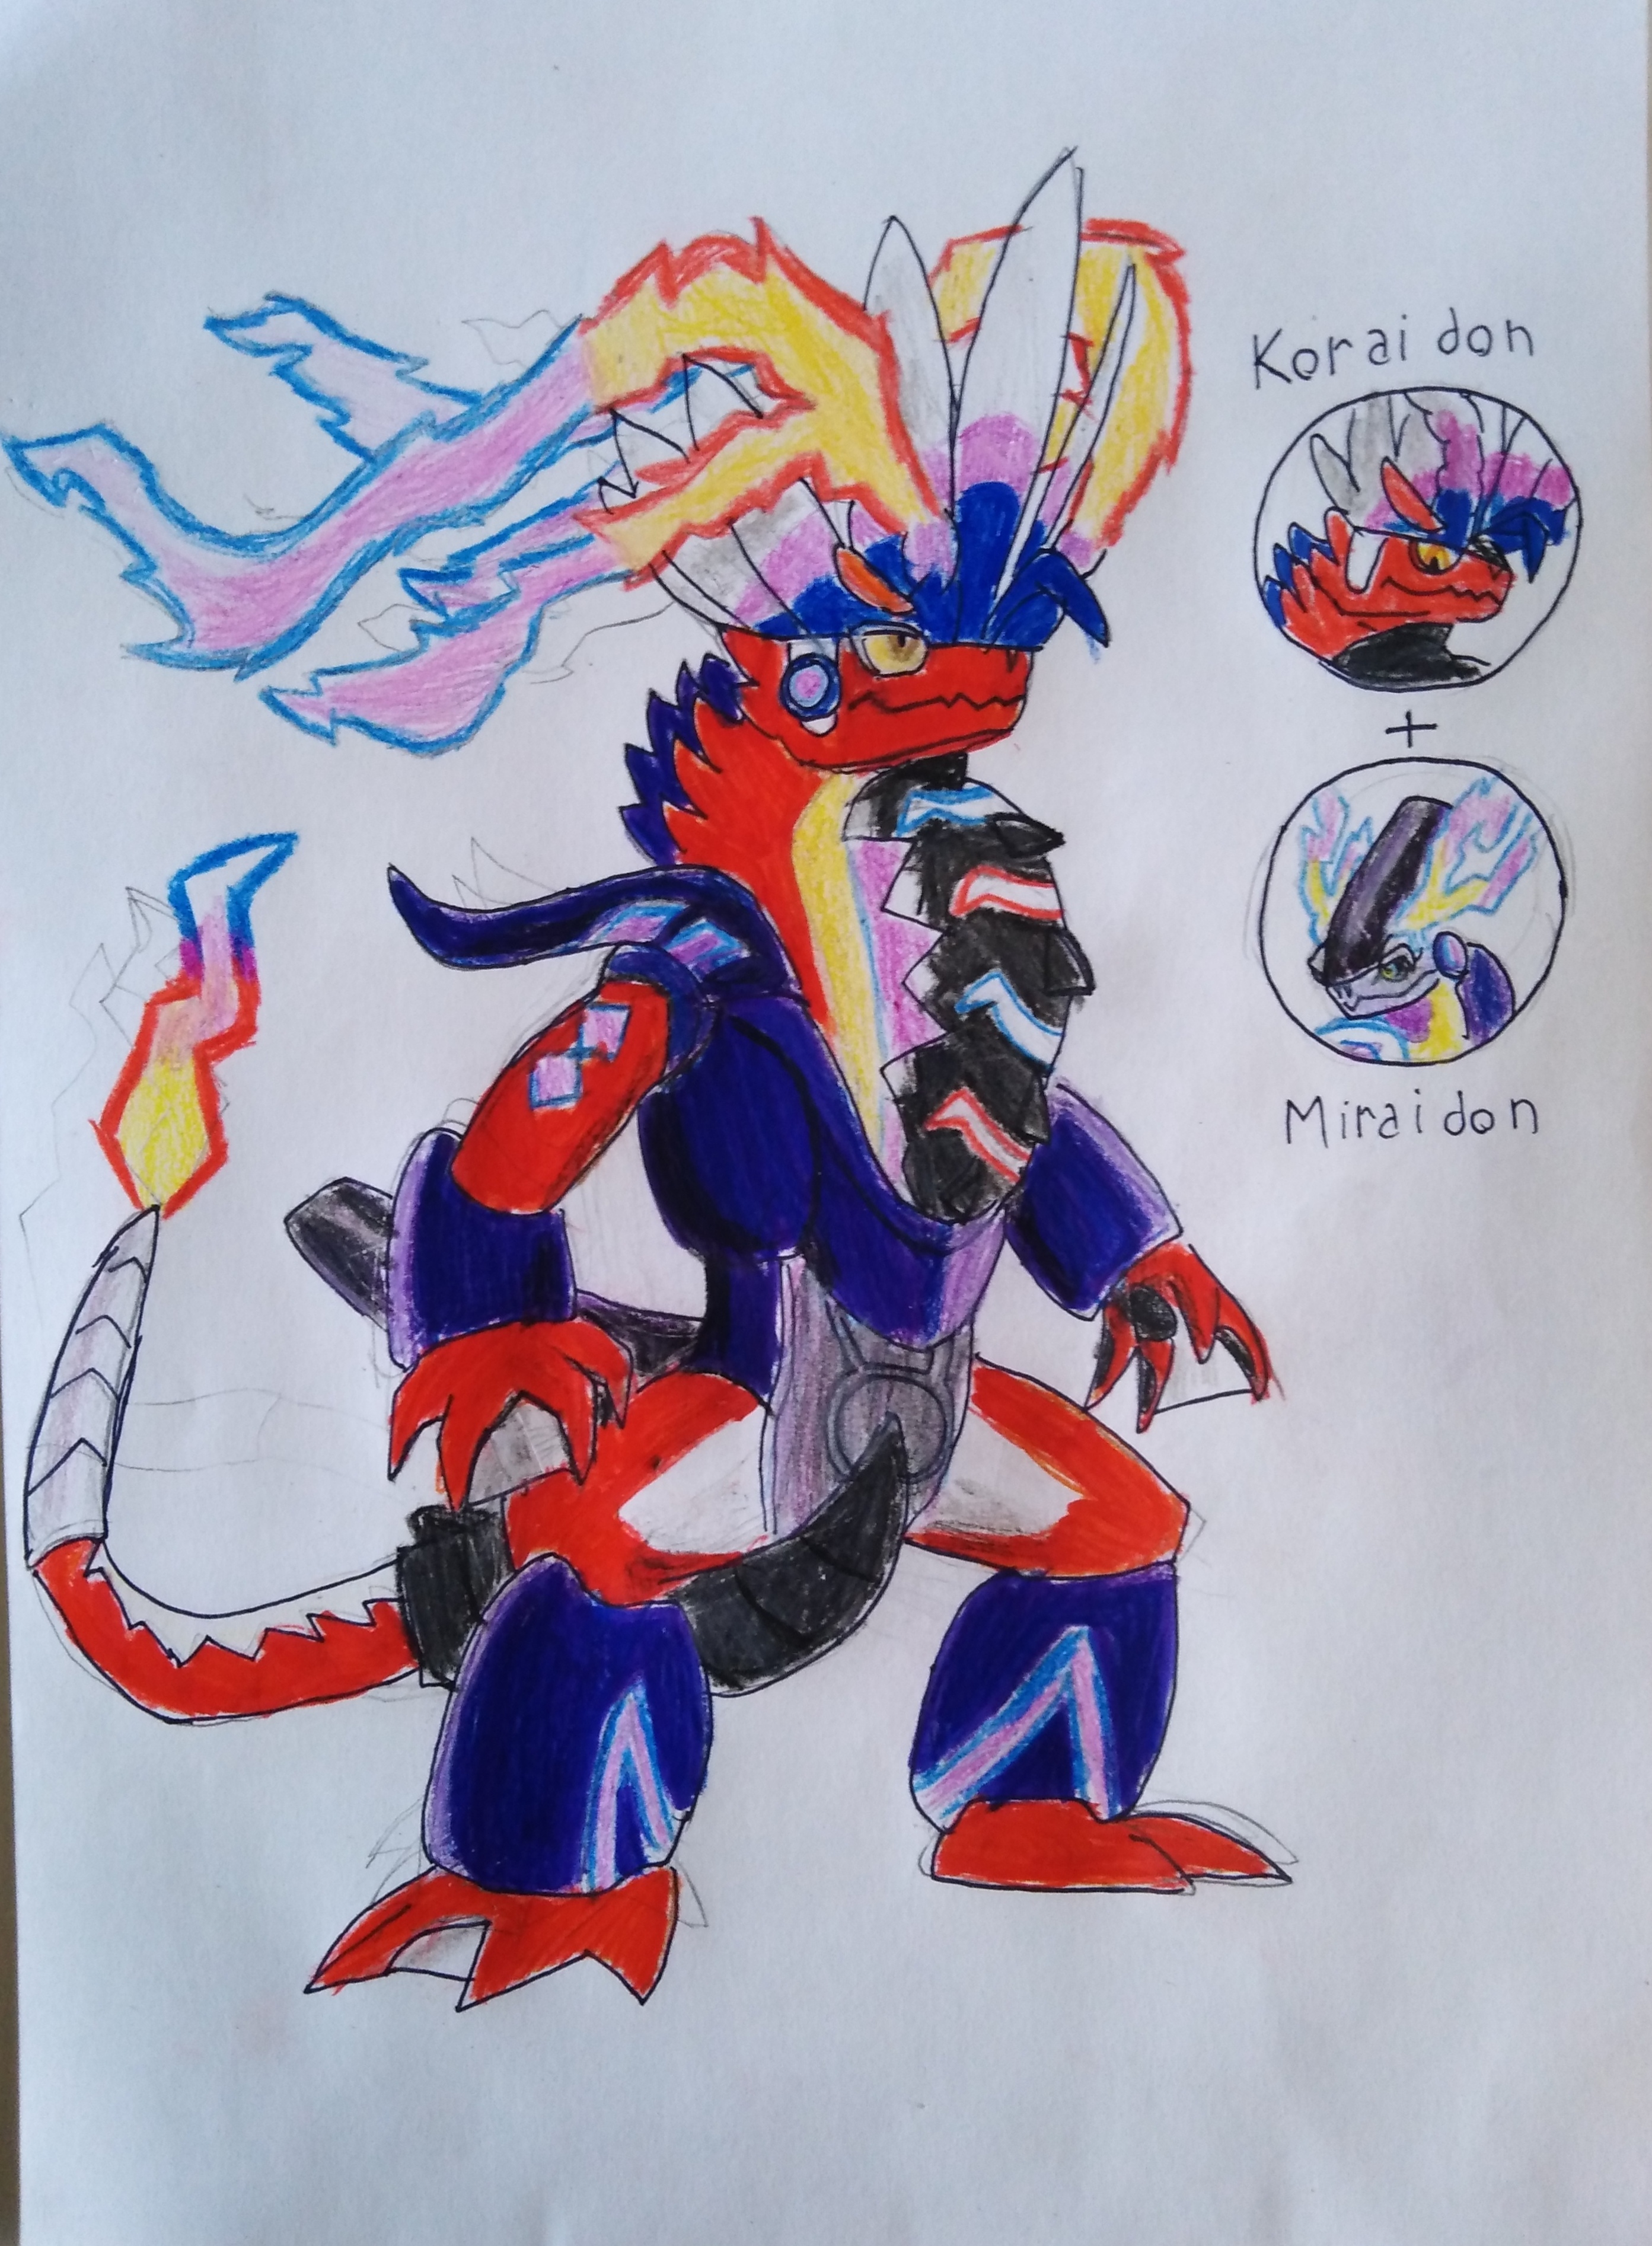 koraidon and miraidon (pokemon) drawn by komepan